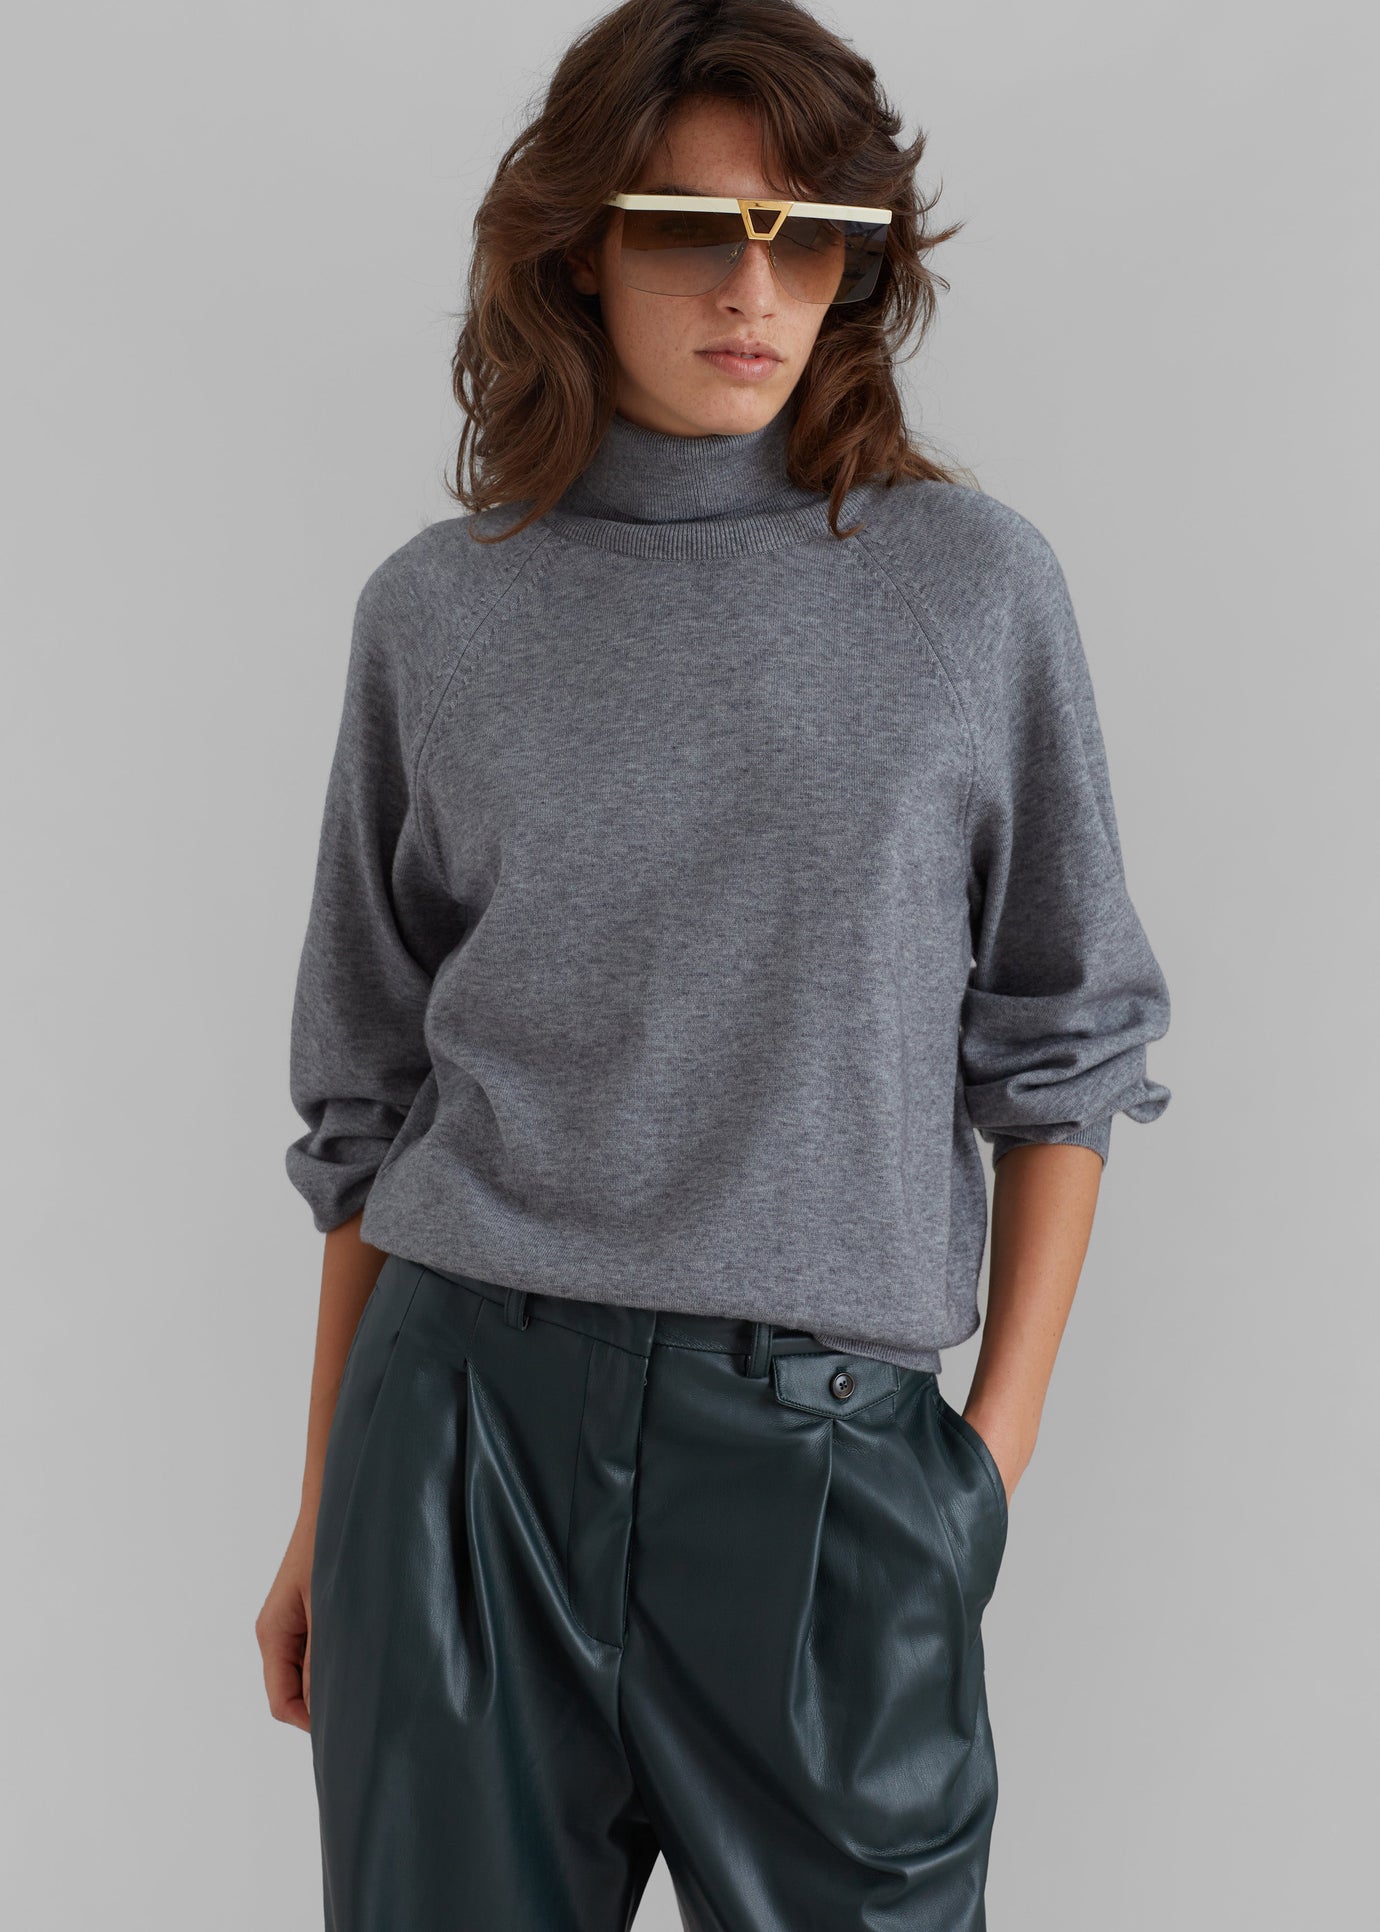 Variel Turtleneck Sweater - Charcoal